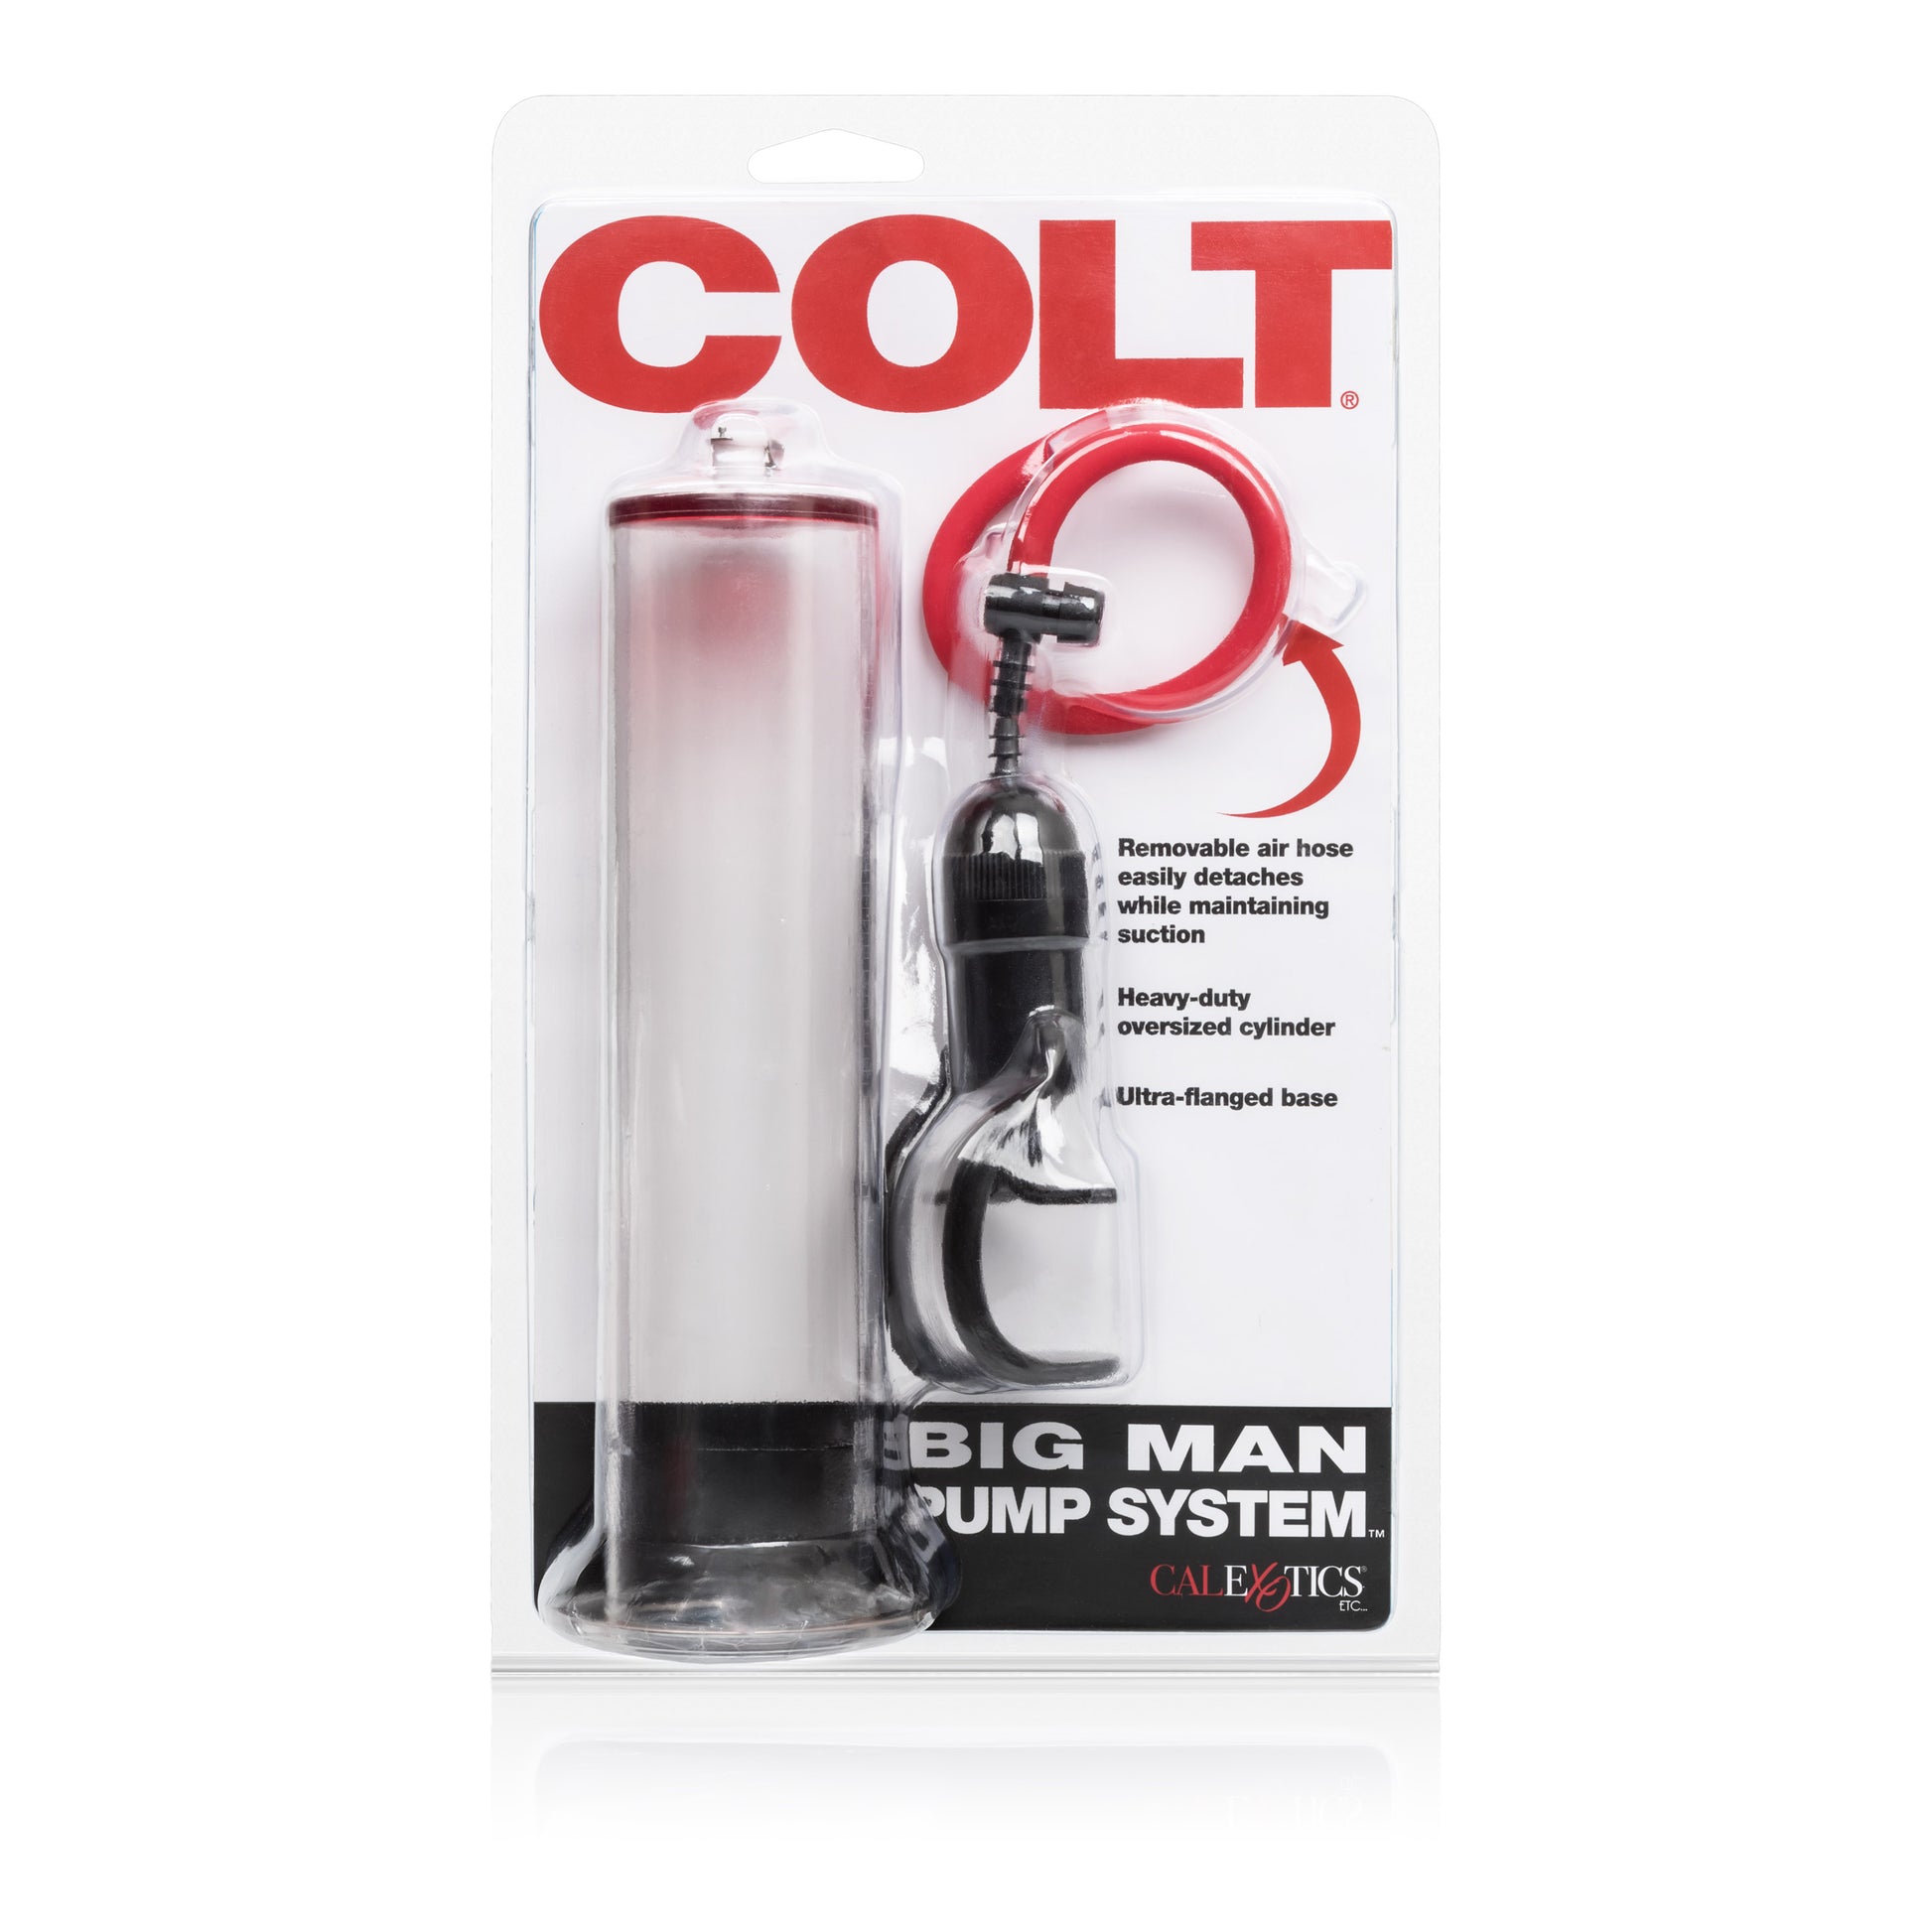 Colt Big Man Pump System SE6789002